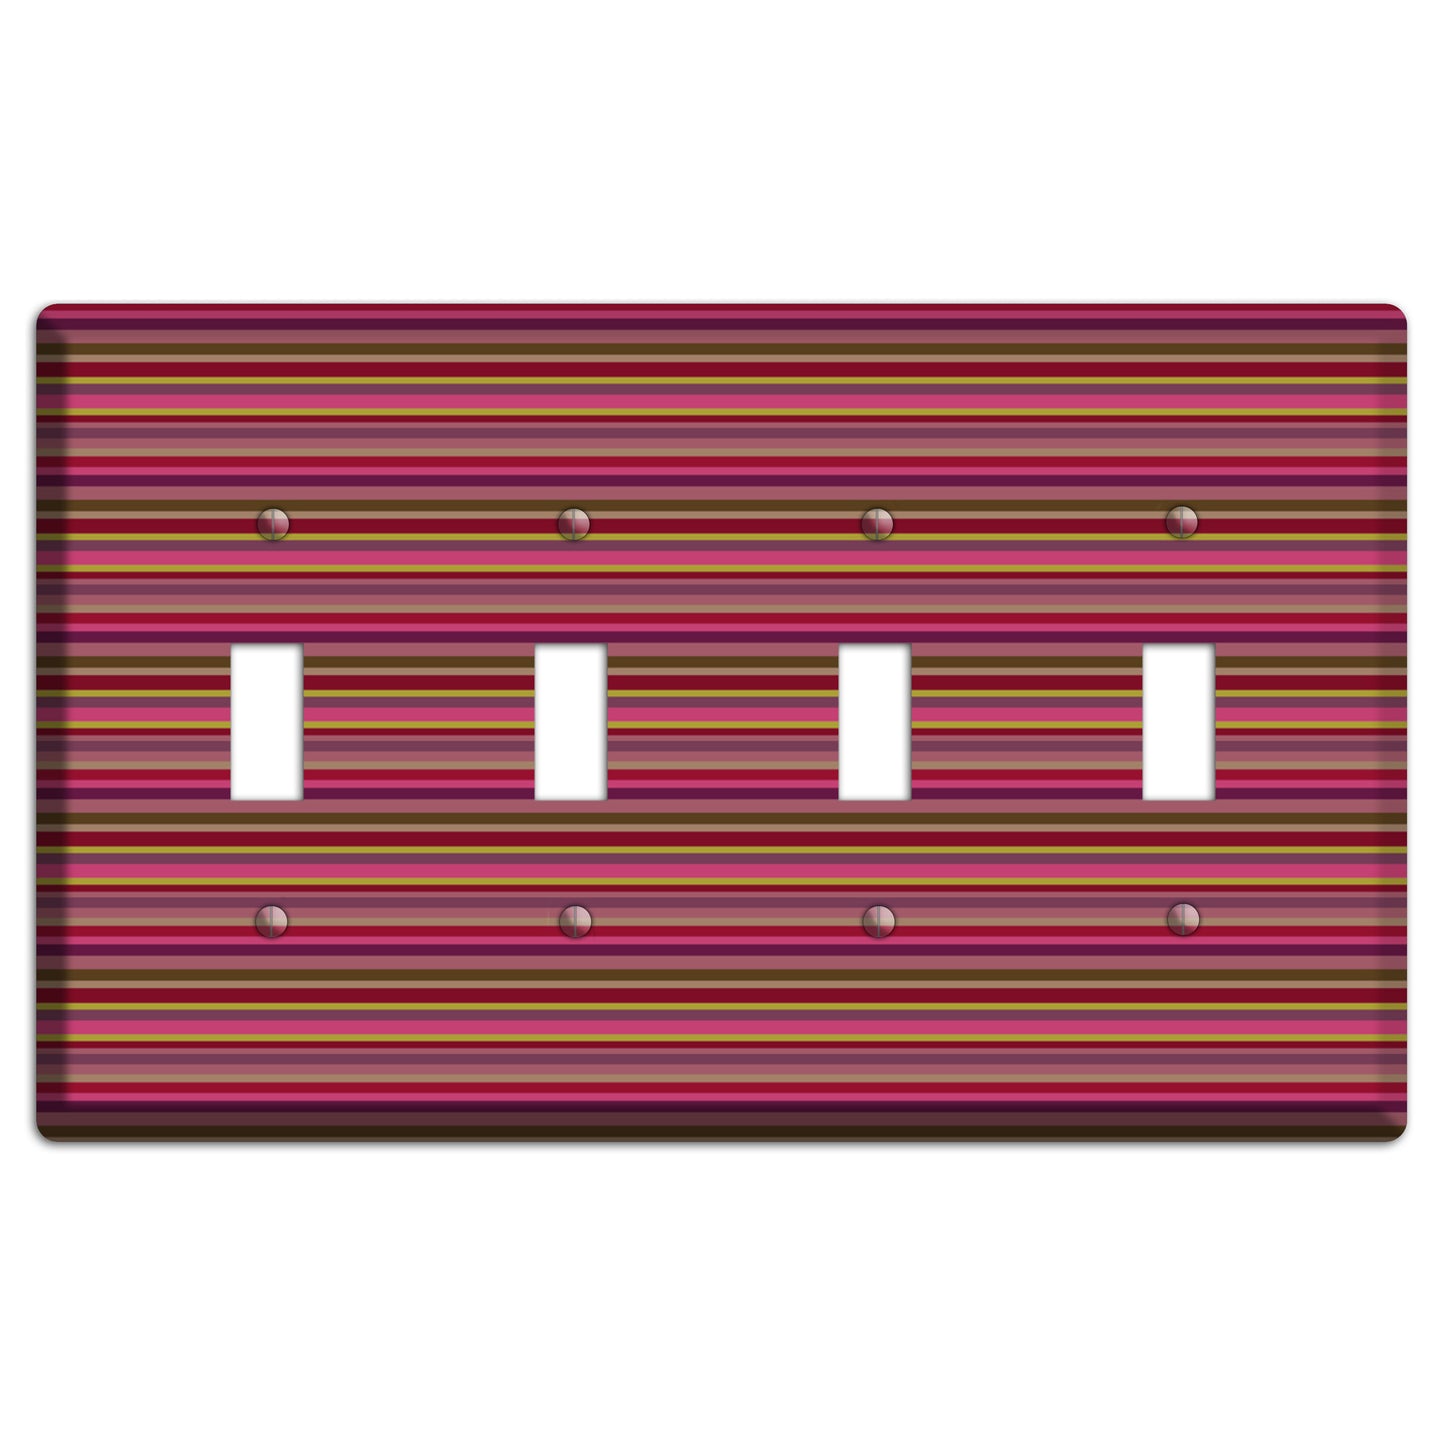 Fuschia Multi Horizontal Stripes 4 Toggle Wallplate